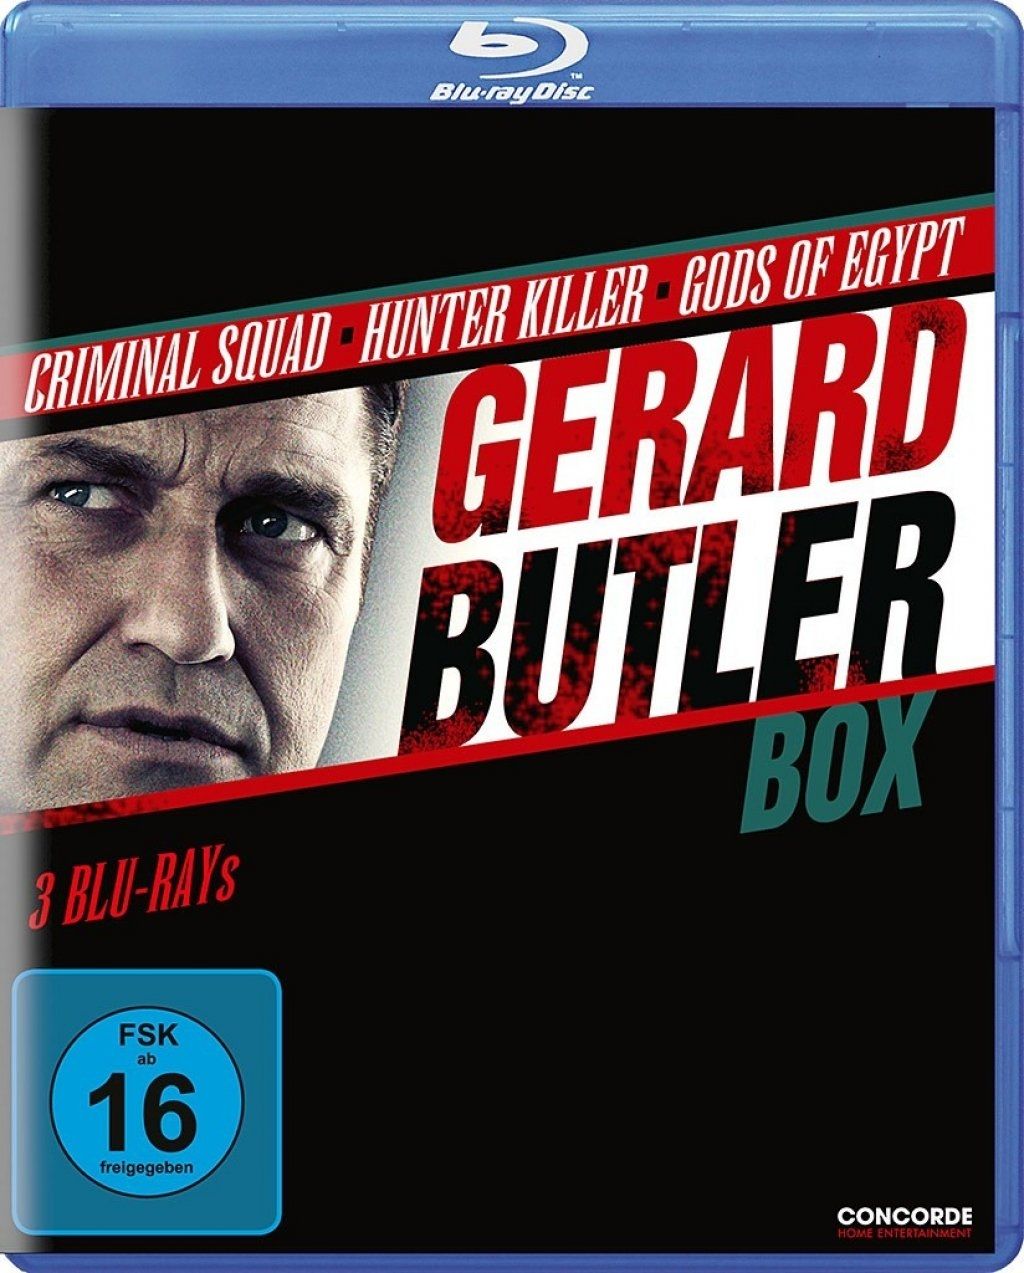 Criminal Squad / Hunter Killer / Gods of Egypt (Gerard Butler Box) (3 Discs) (BLURAY)